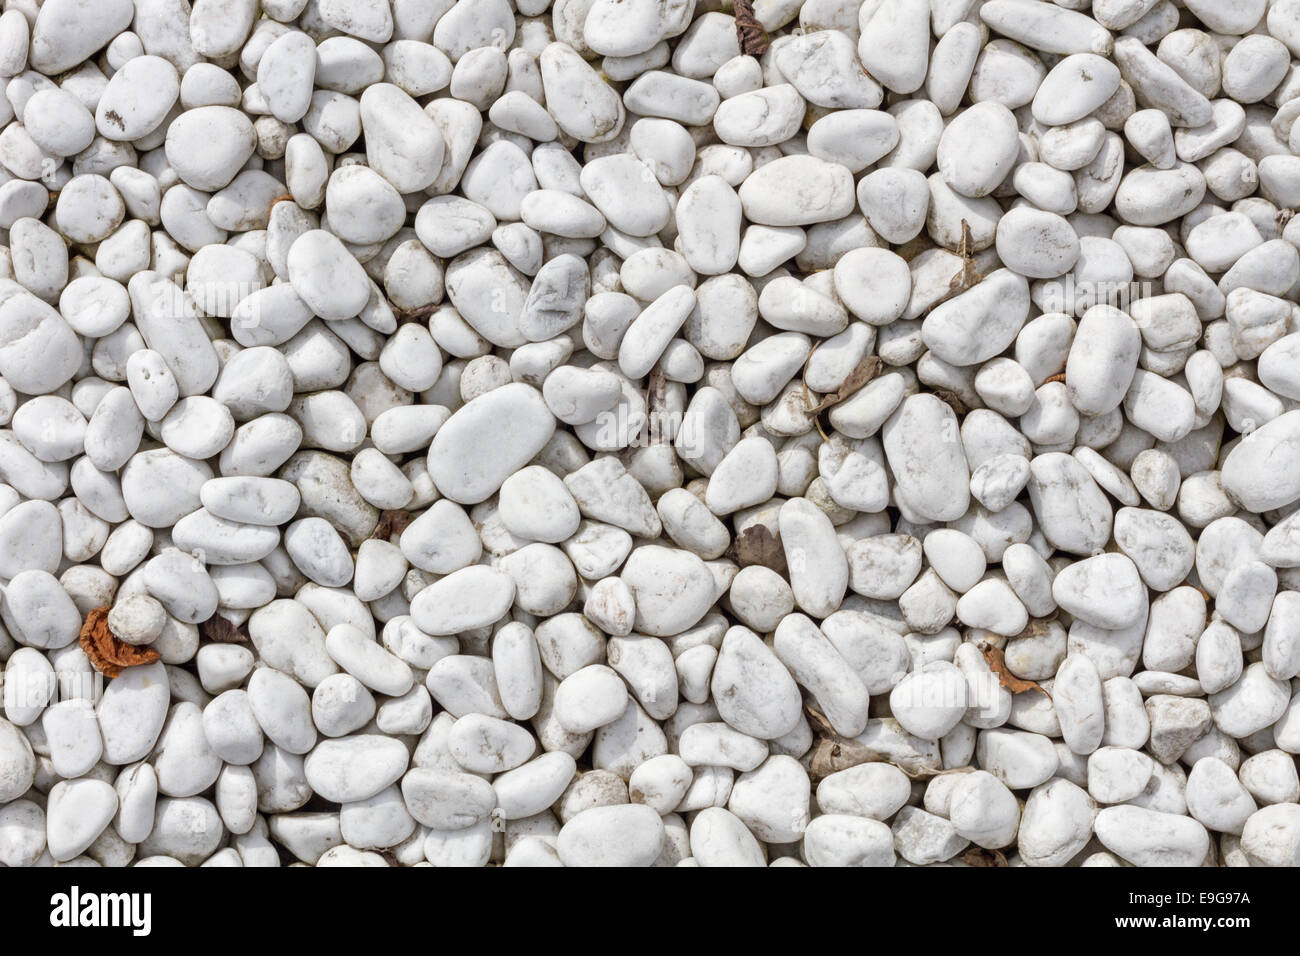 White pebbles in plan view Stock Photo